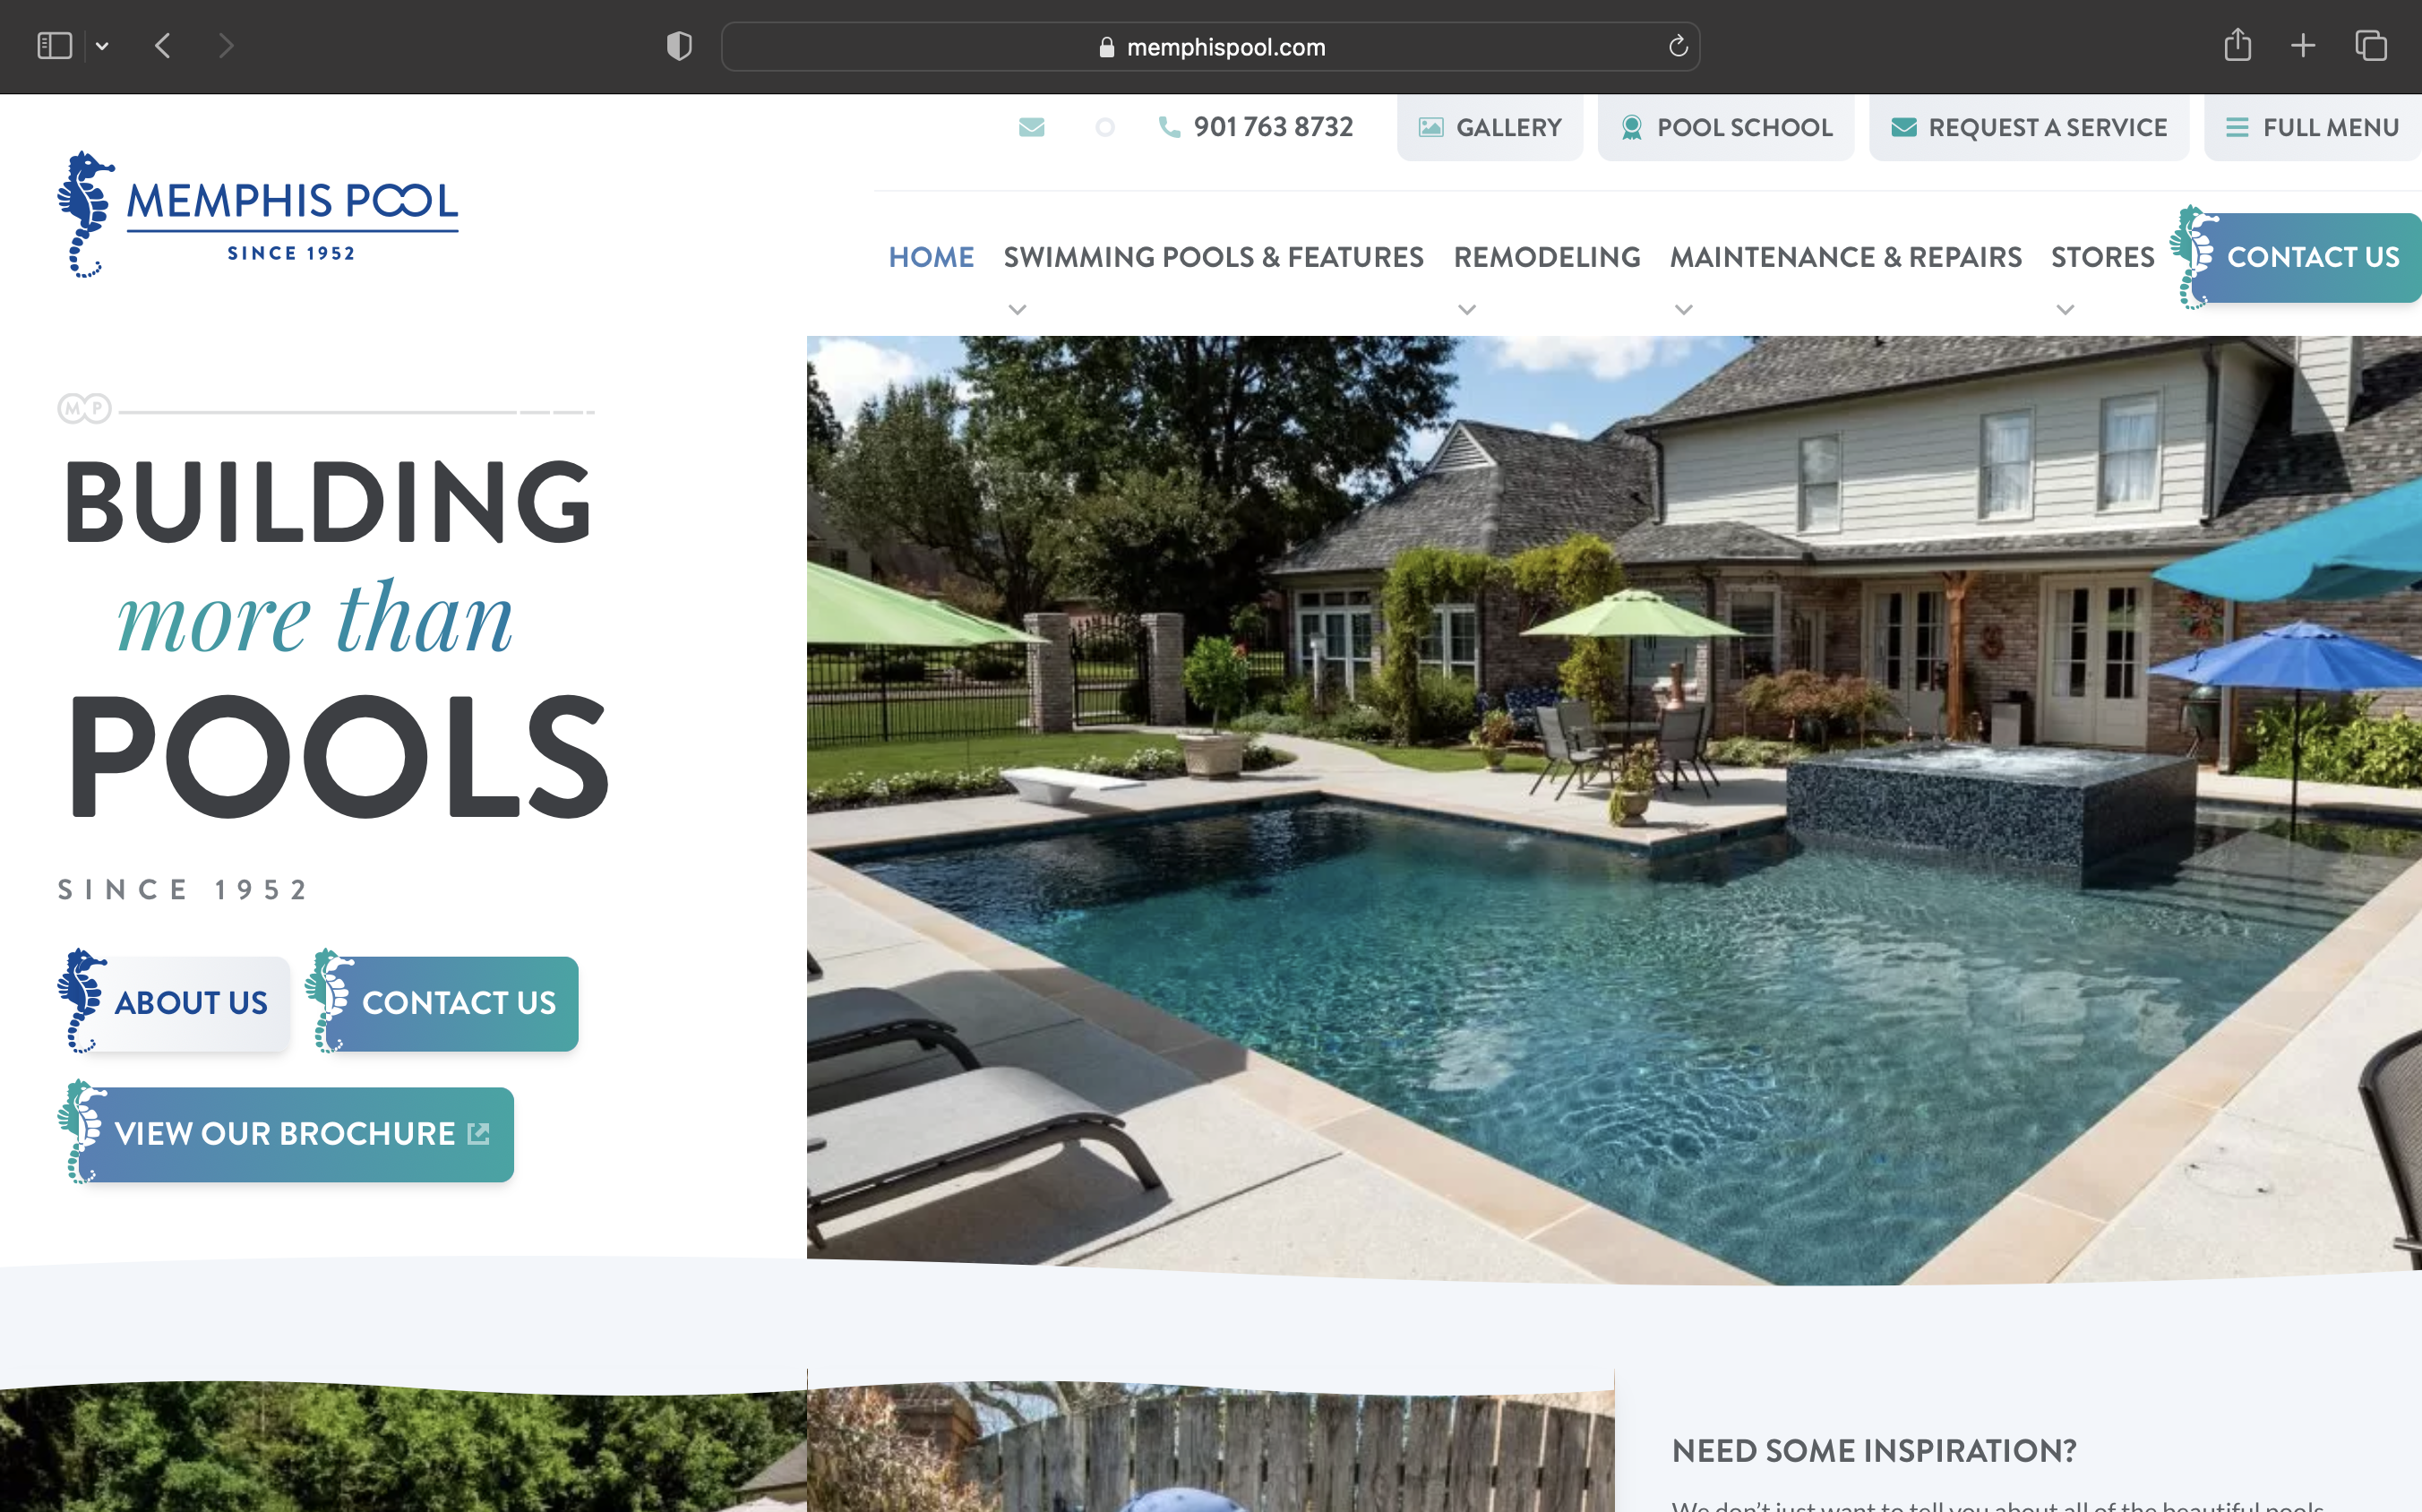 Memphis Pool website screenshot